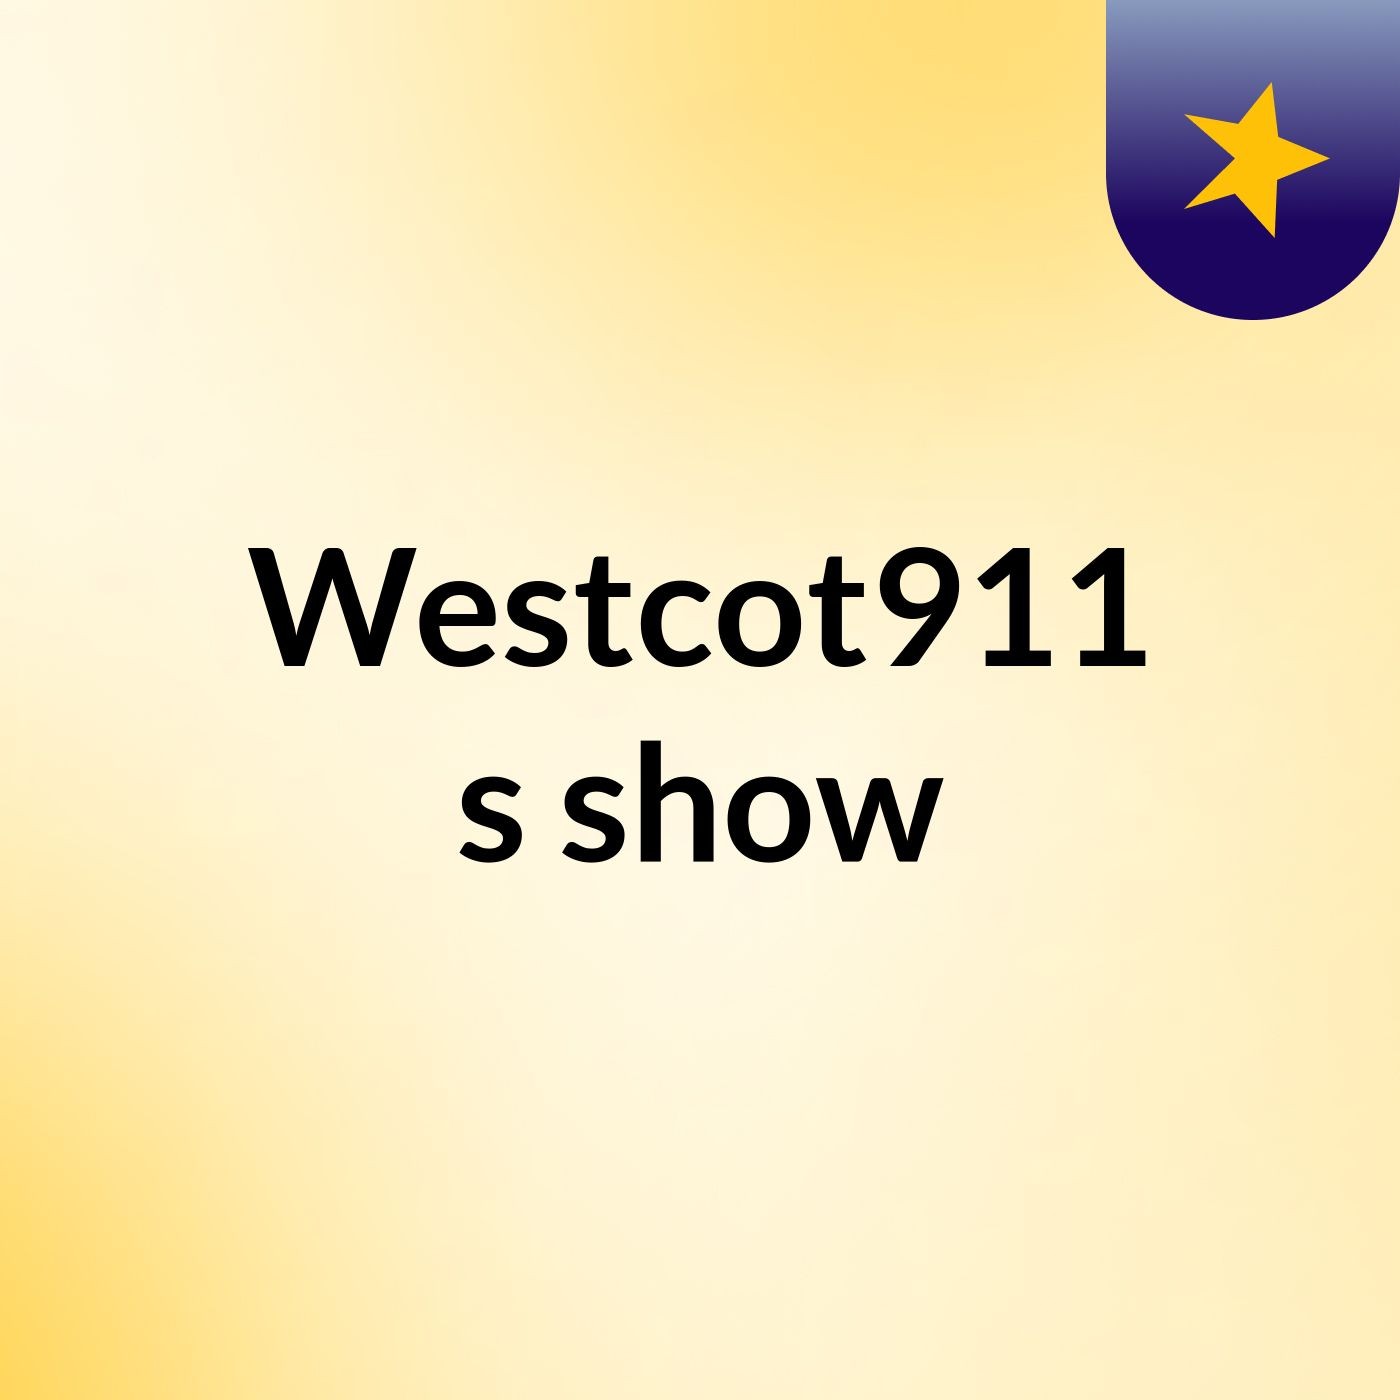 Westcot911's show